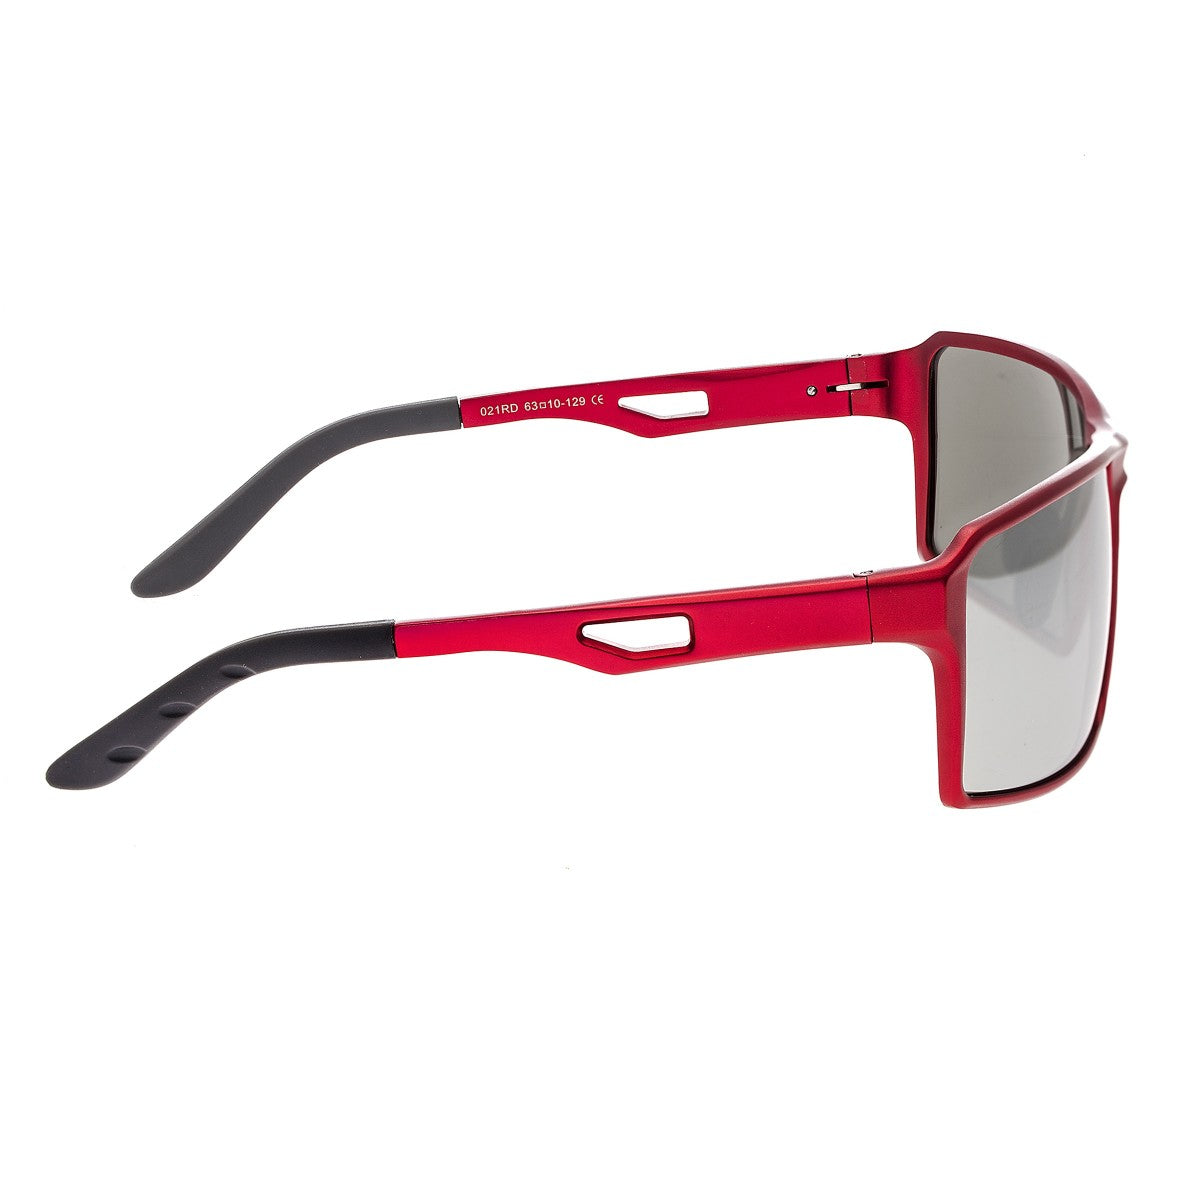 Breed Centaurus Aluminium Polarized Sunglasses - Red/Silver - BSG021RD